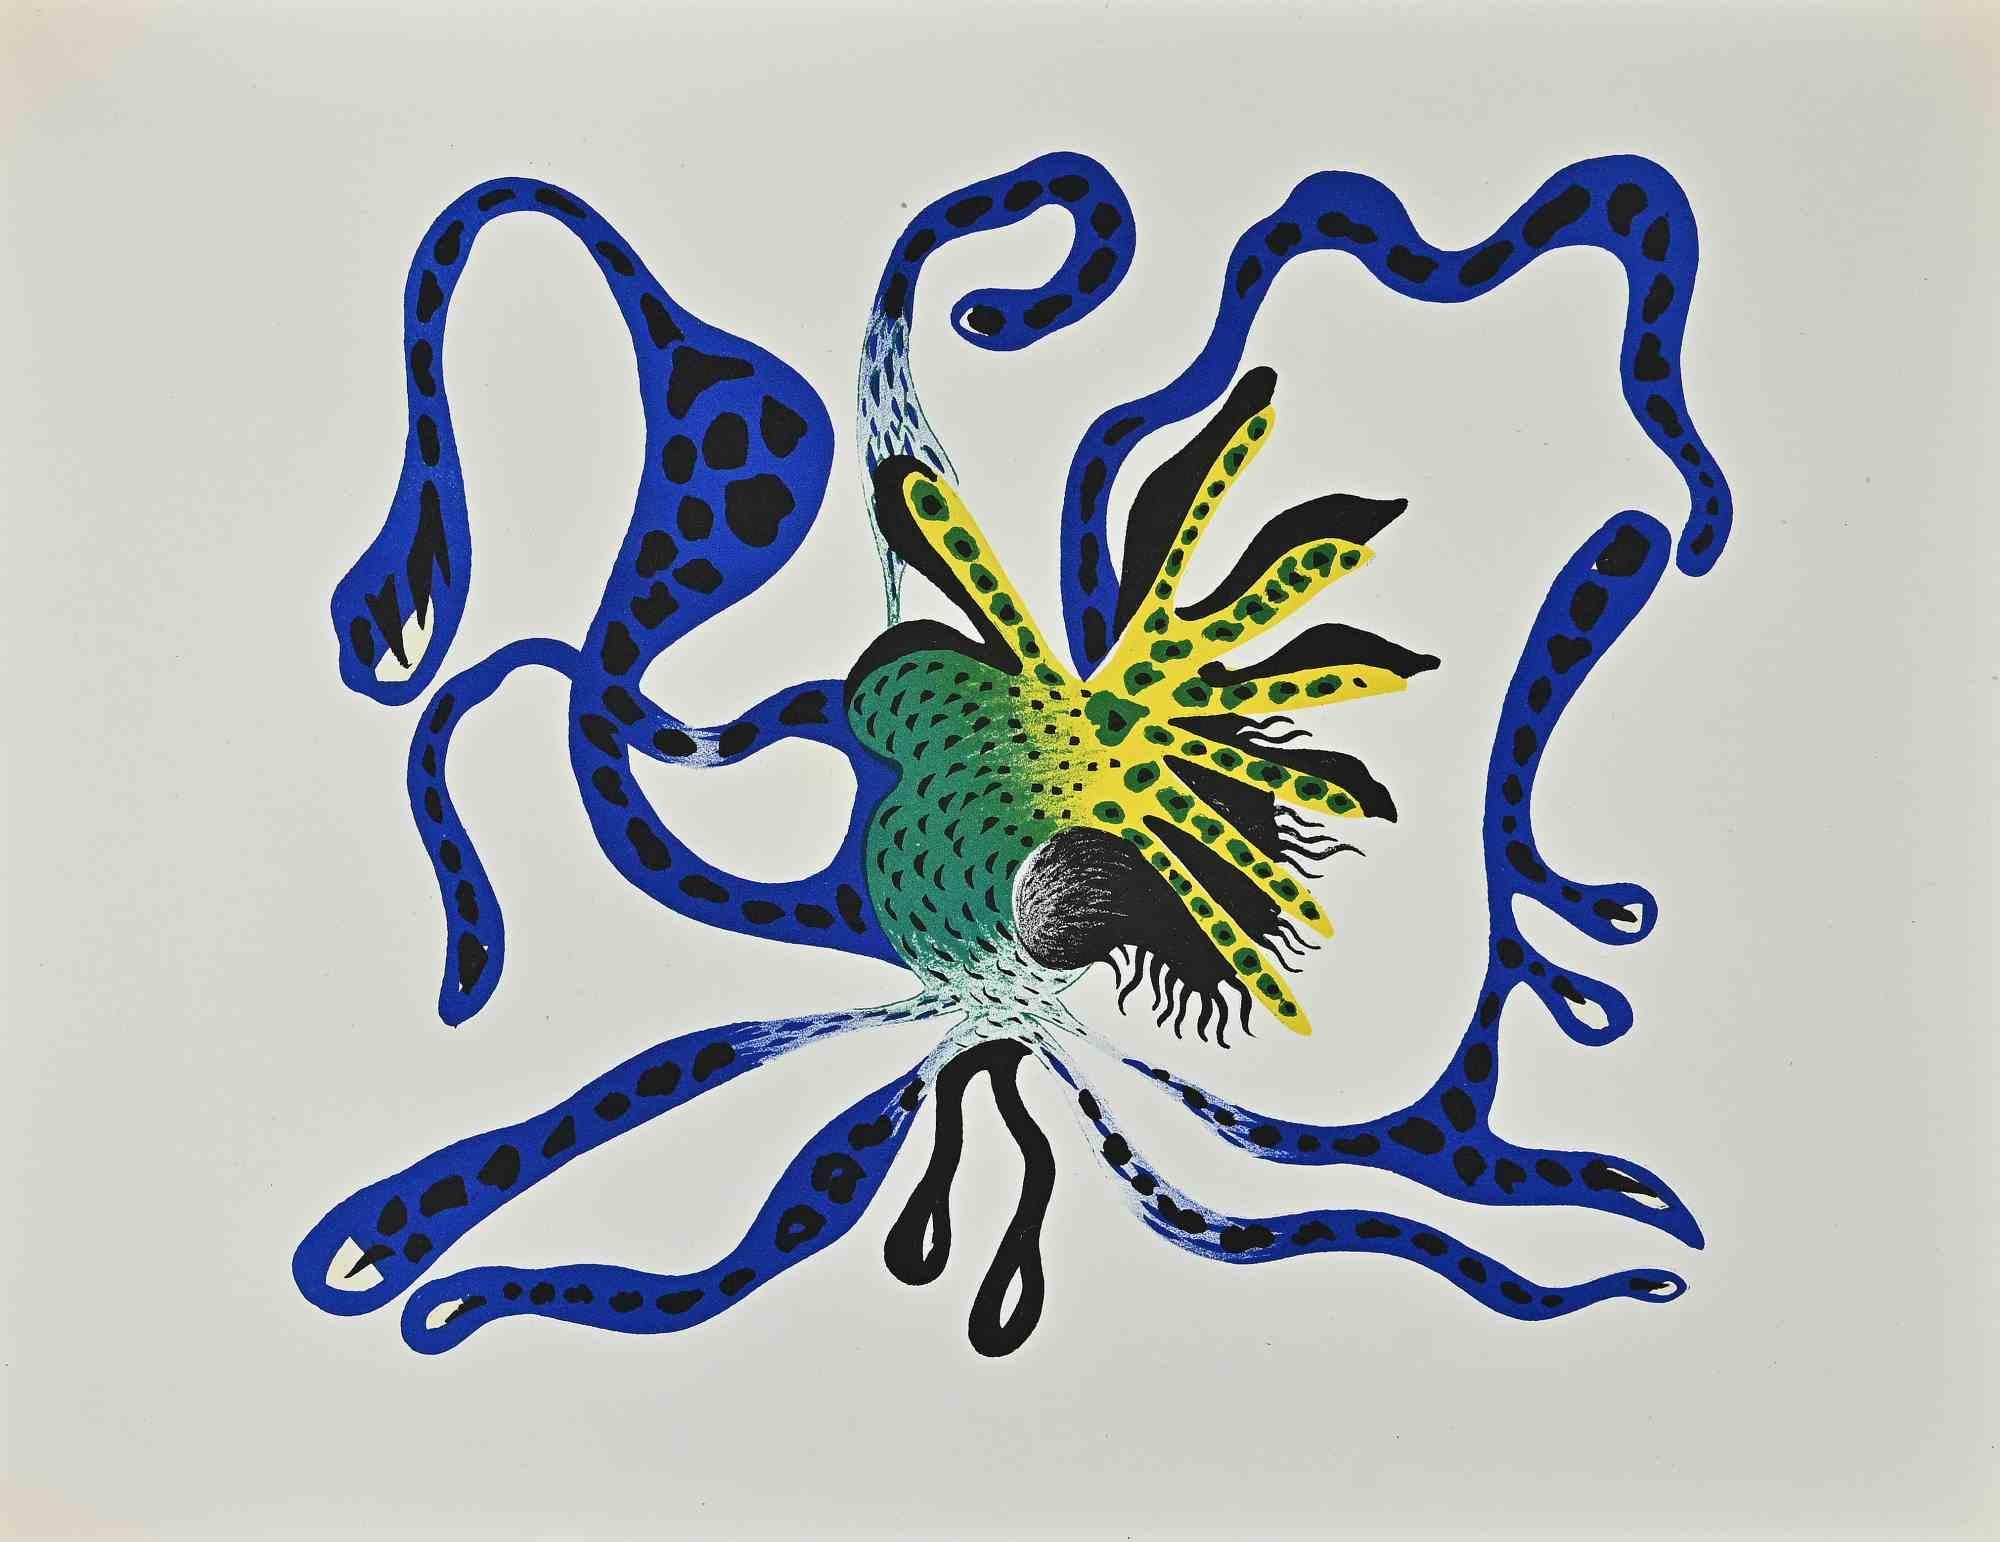 Octopus - Woodcut by Jean Lurçat - 1948